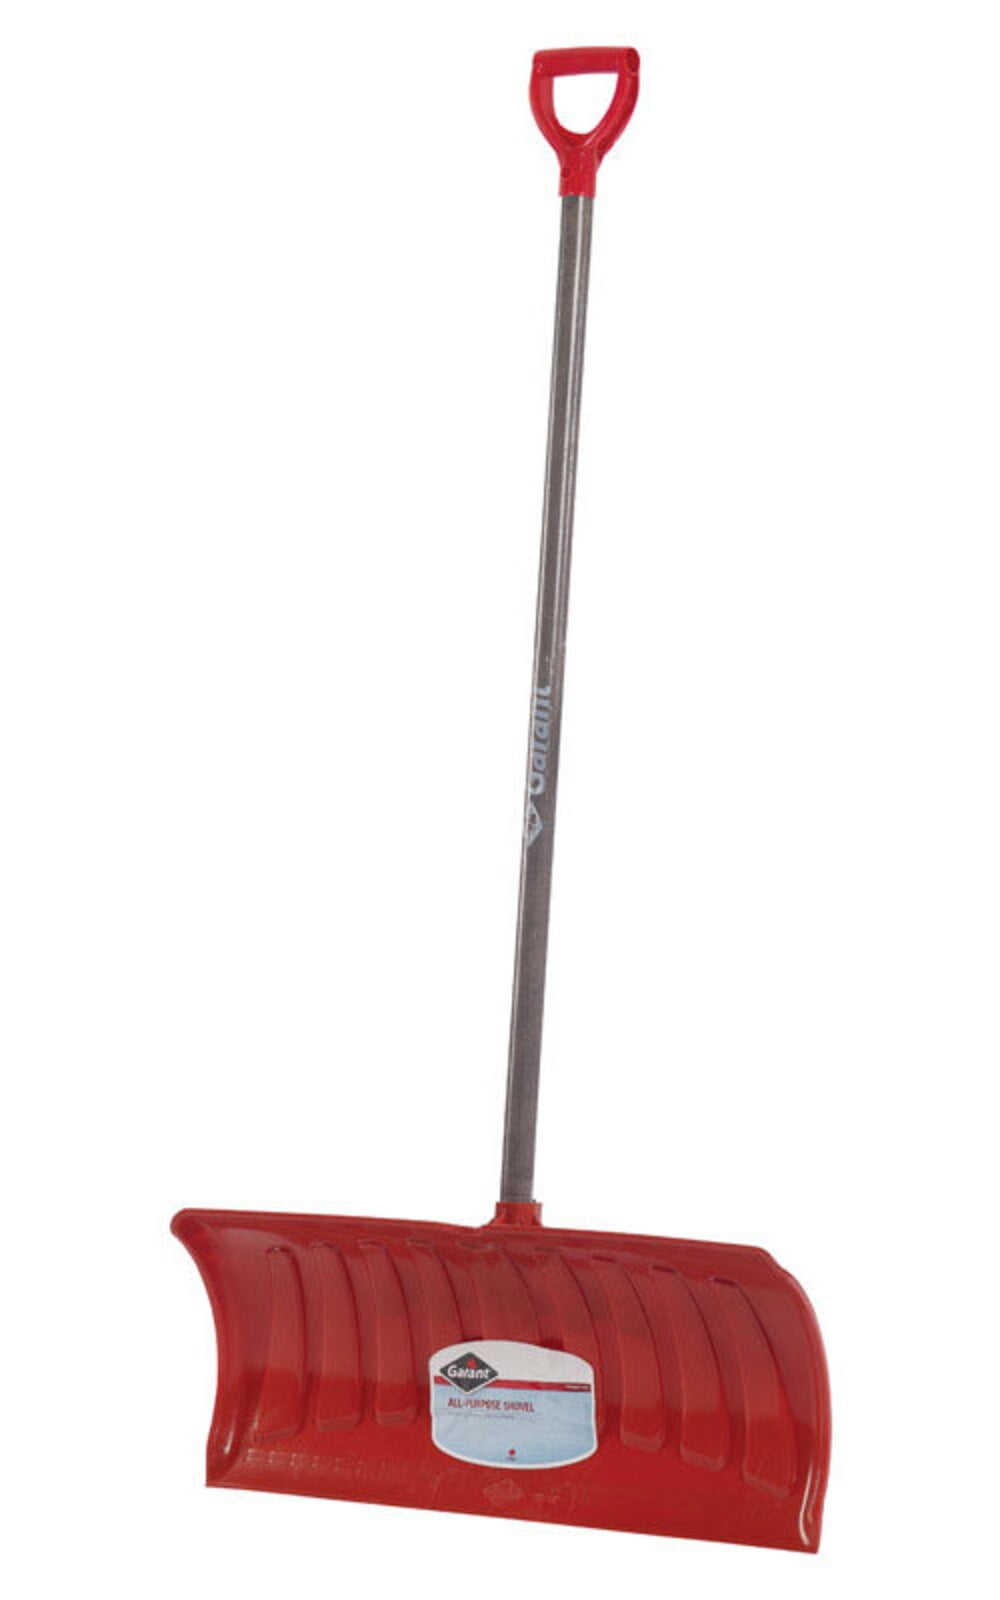 Yellow garant aprs106 Snowflex Compact Snow Shovel 